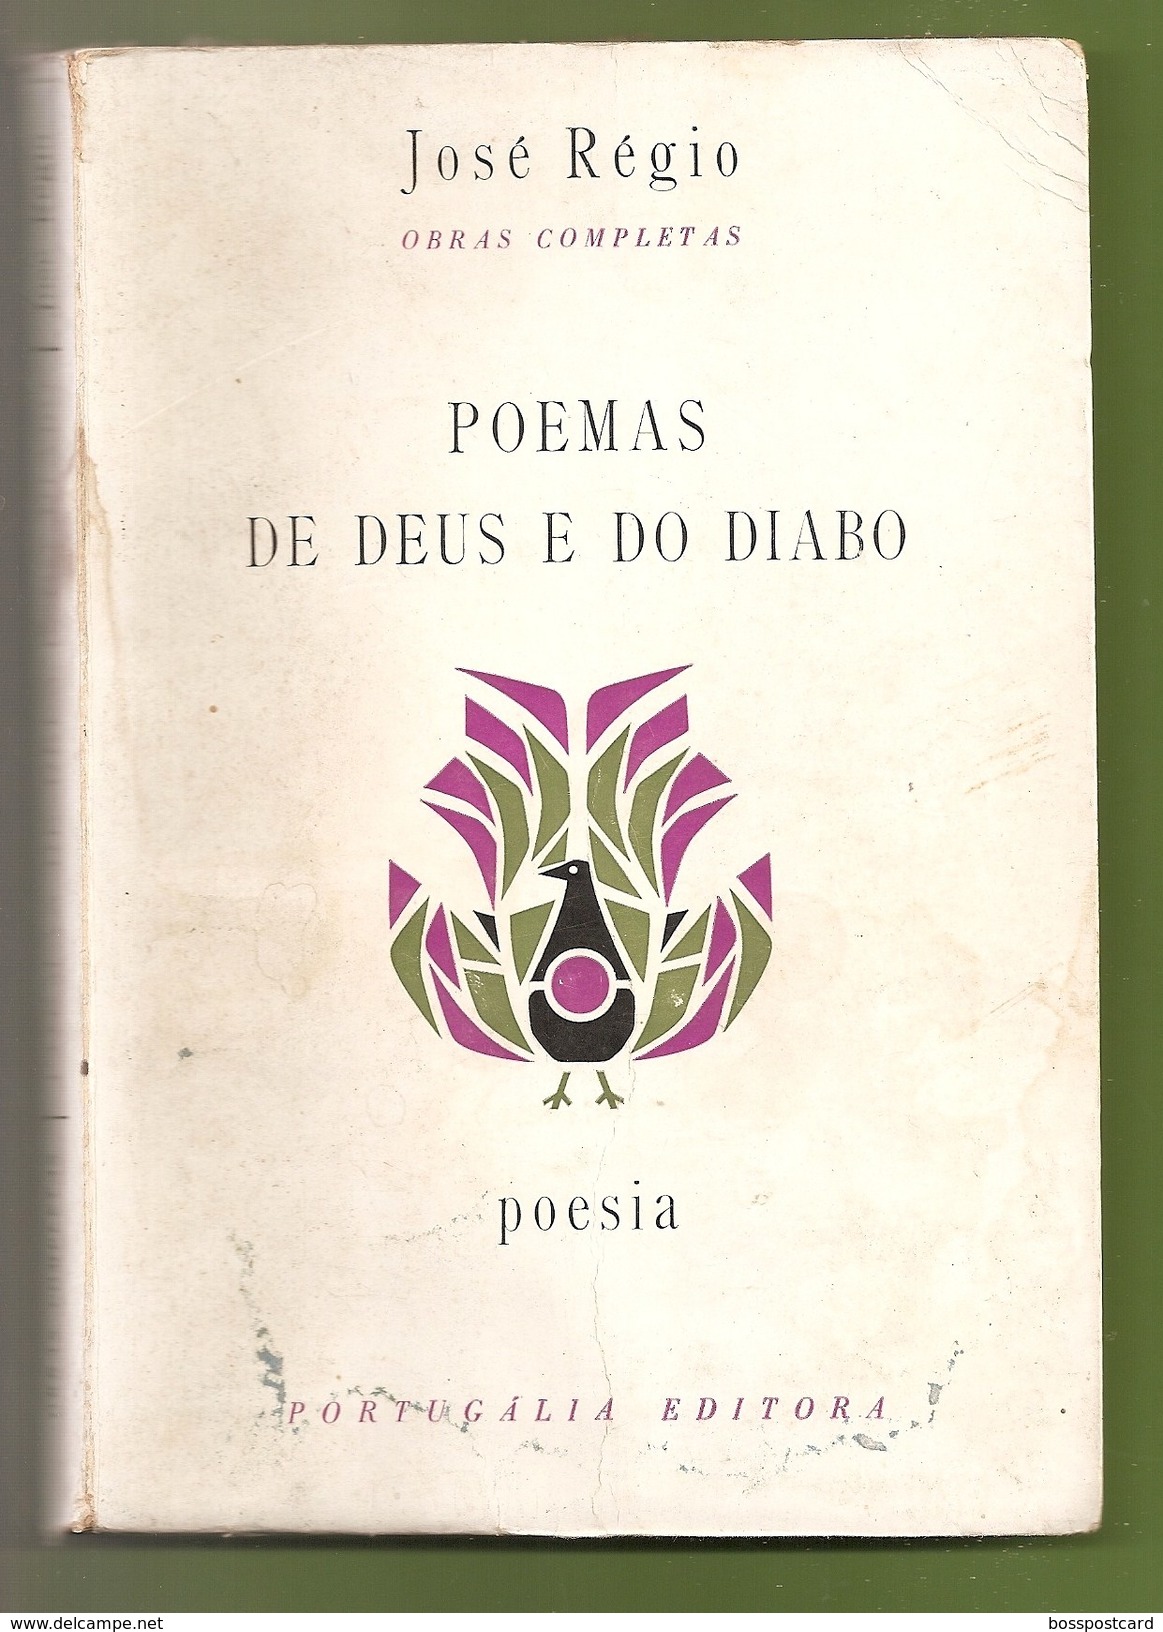 Portalegre - Poemas De Deus E Do Diabo - José Régio - Lisboa - Portugal - Poetry